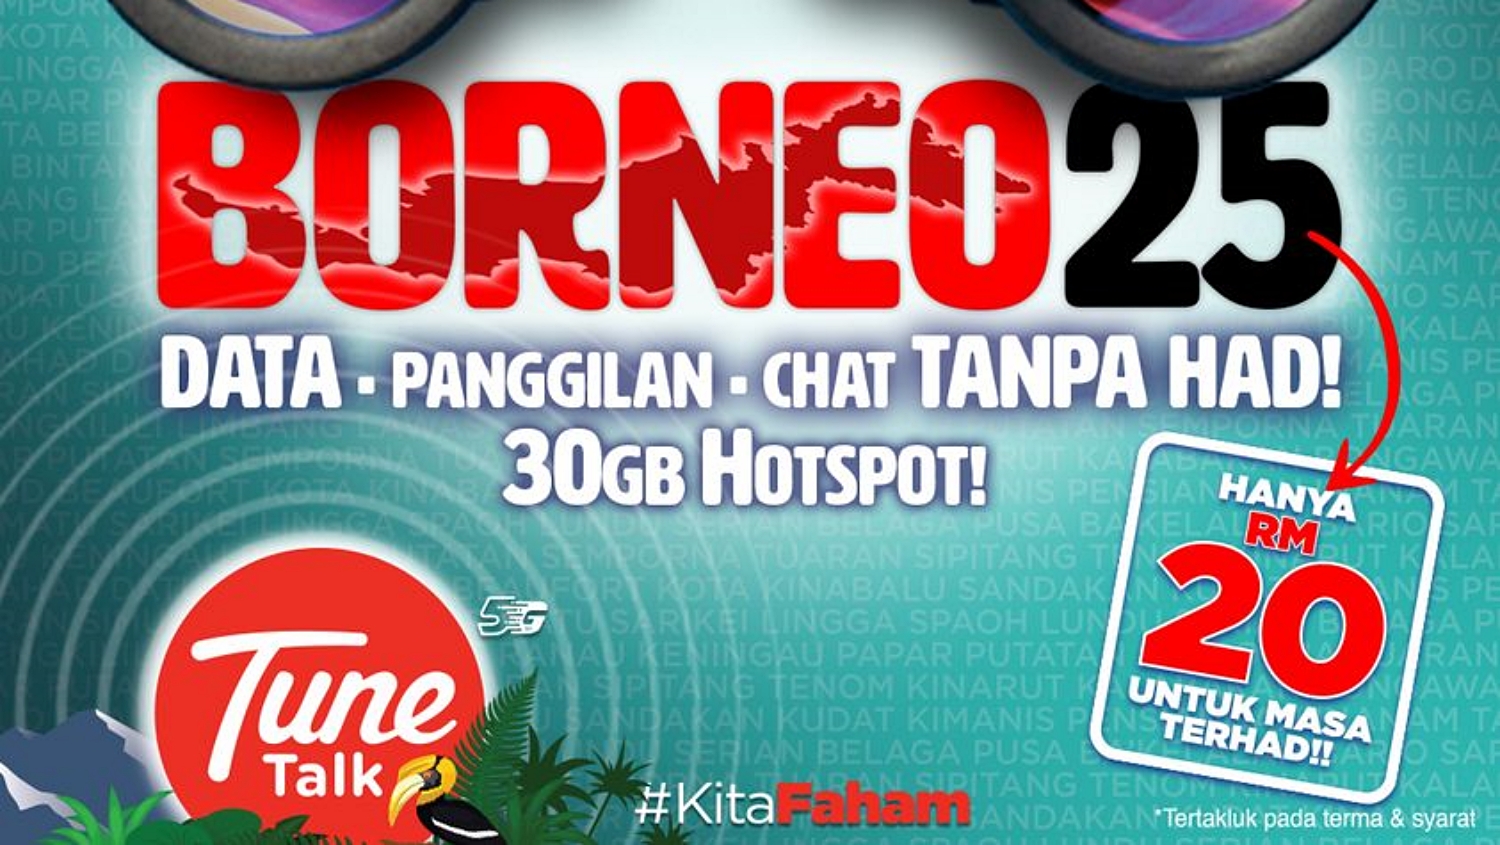 Pelan TuneTalk Borneo25 Tawar Data 30GB Tanpa Had Dengan Harga Serendah RM20/Bulan